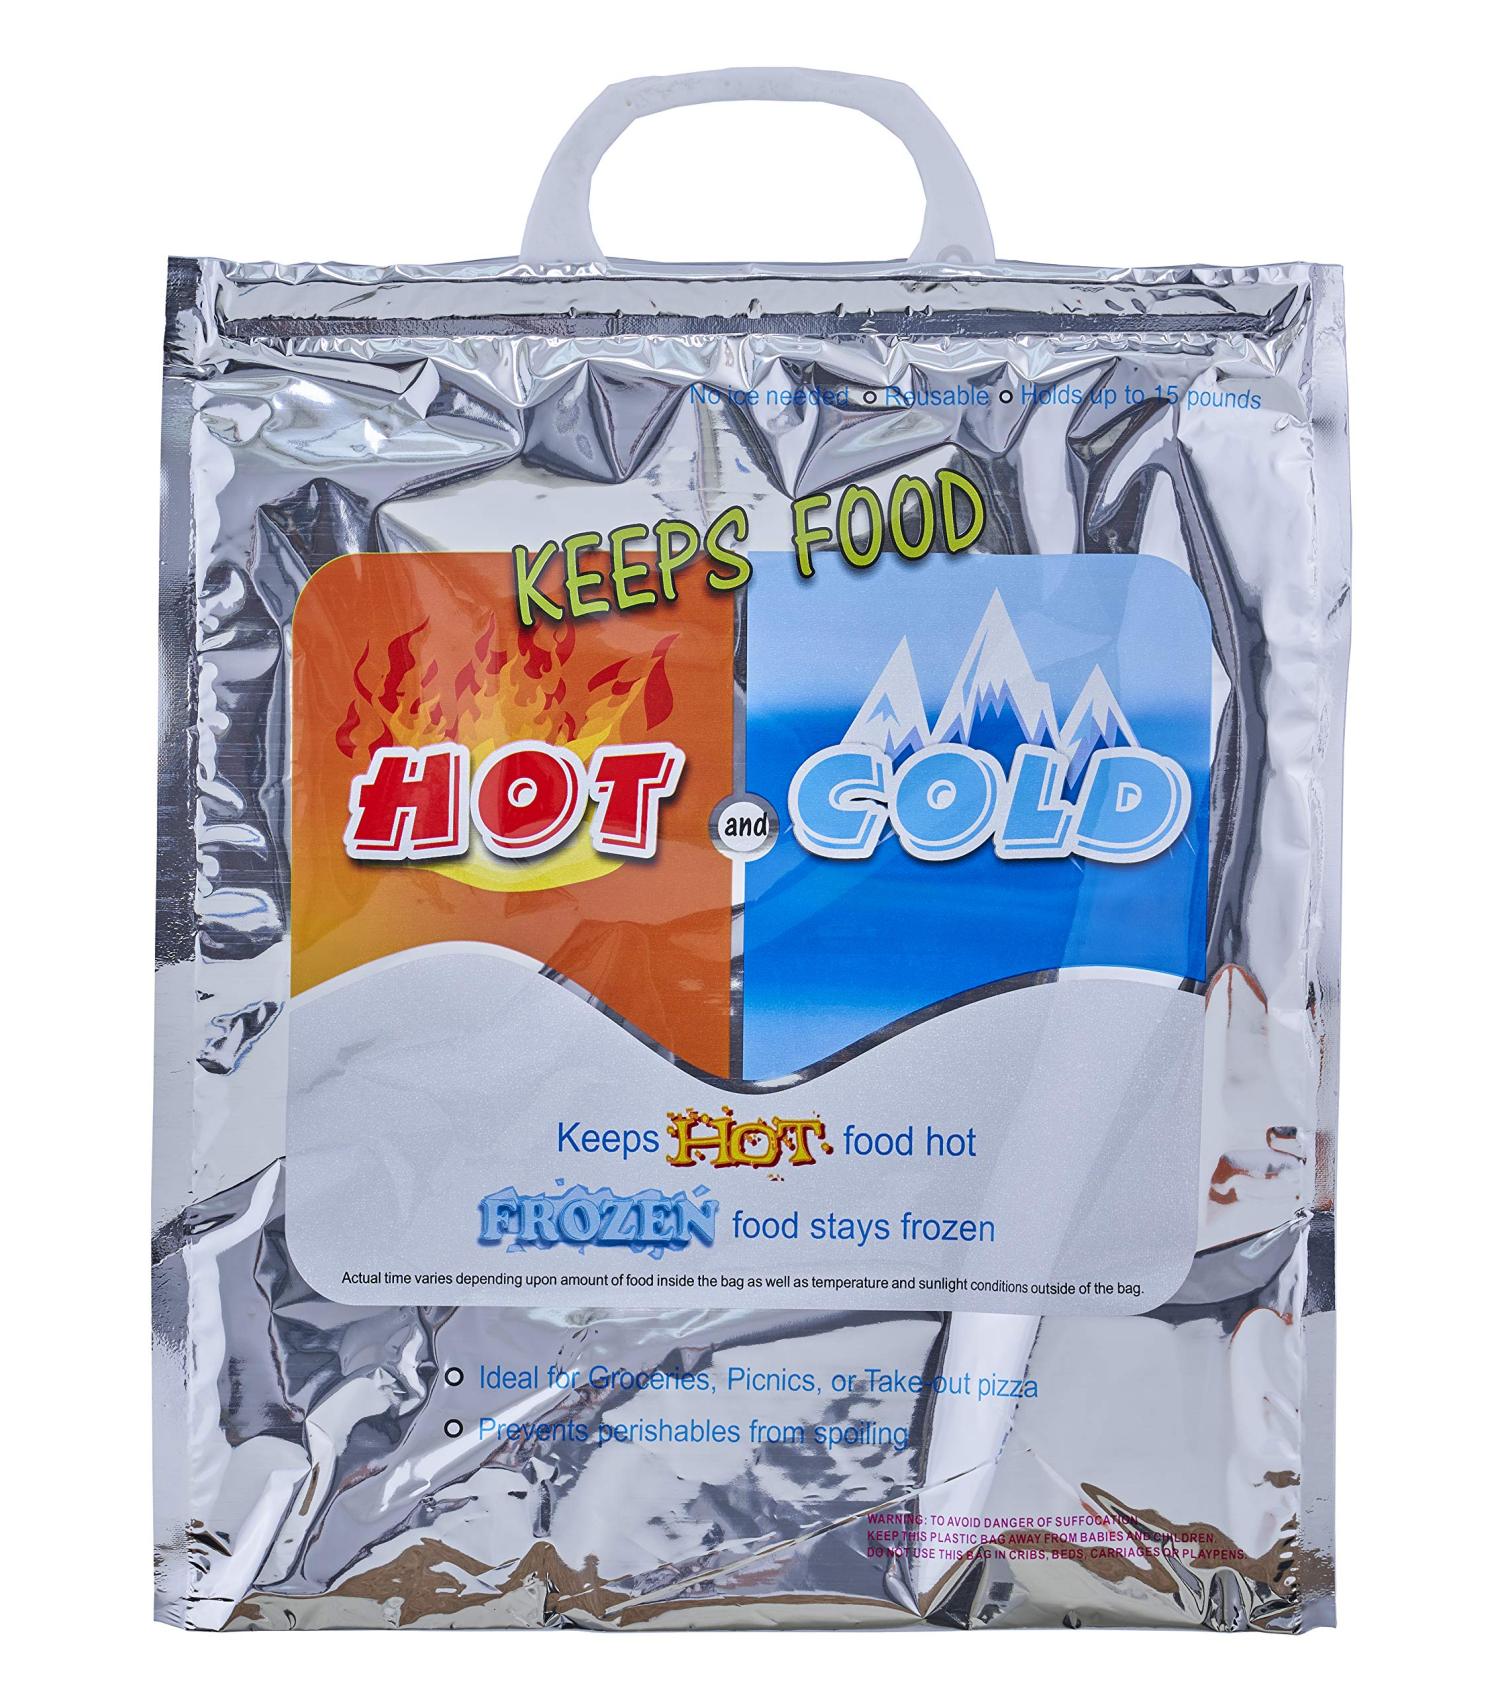  SUNLUG Reusable Ice Packs for Lunch Bags, Long